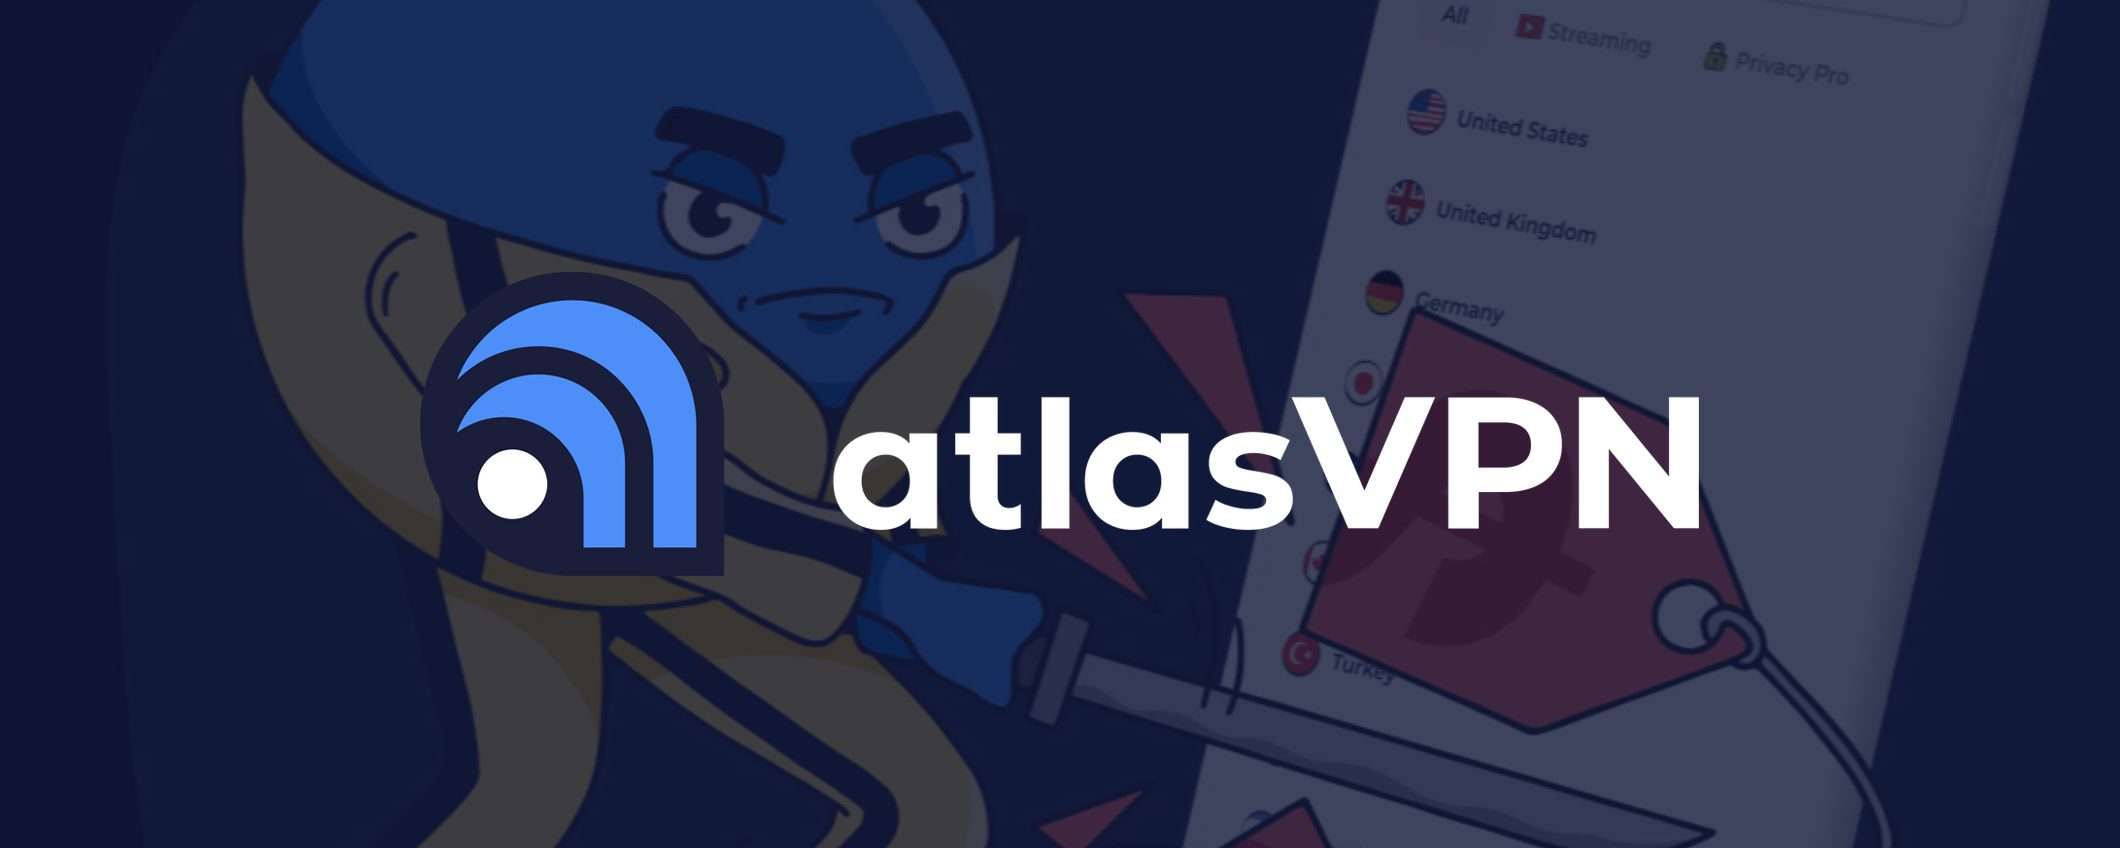 Il Black Friday di Atlas VPN: sconto 86% e sei mesi gratis